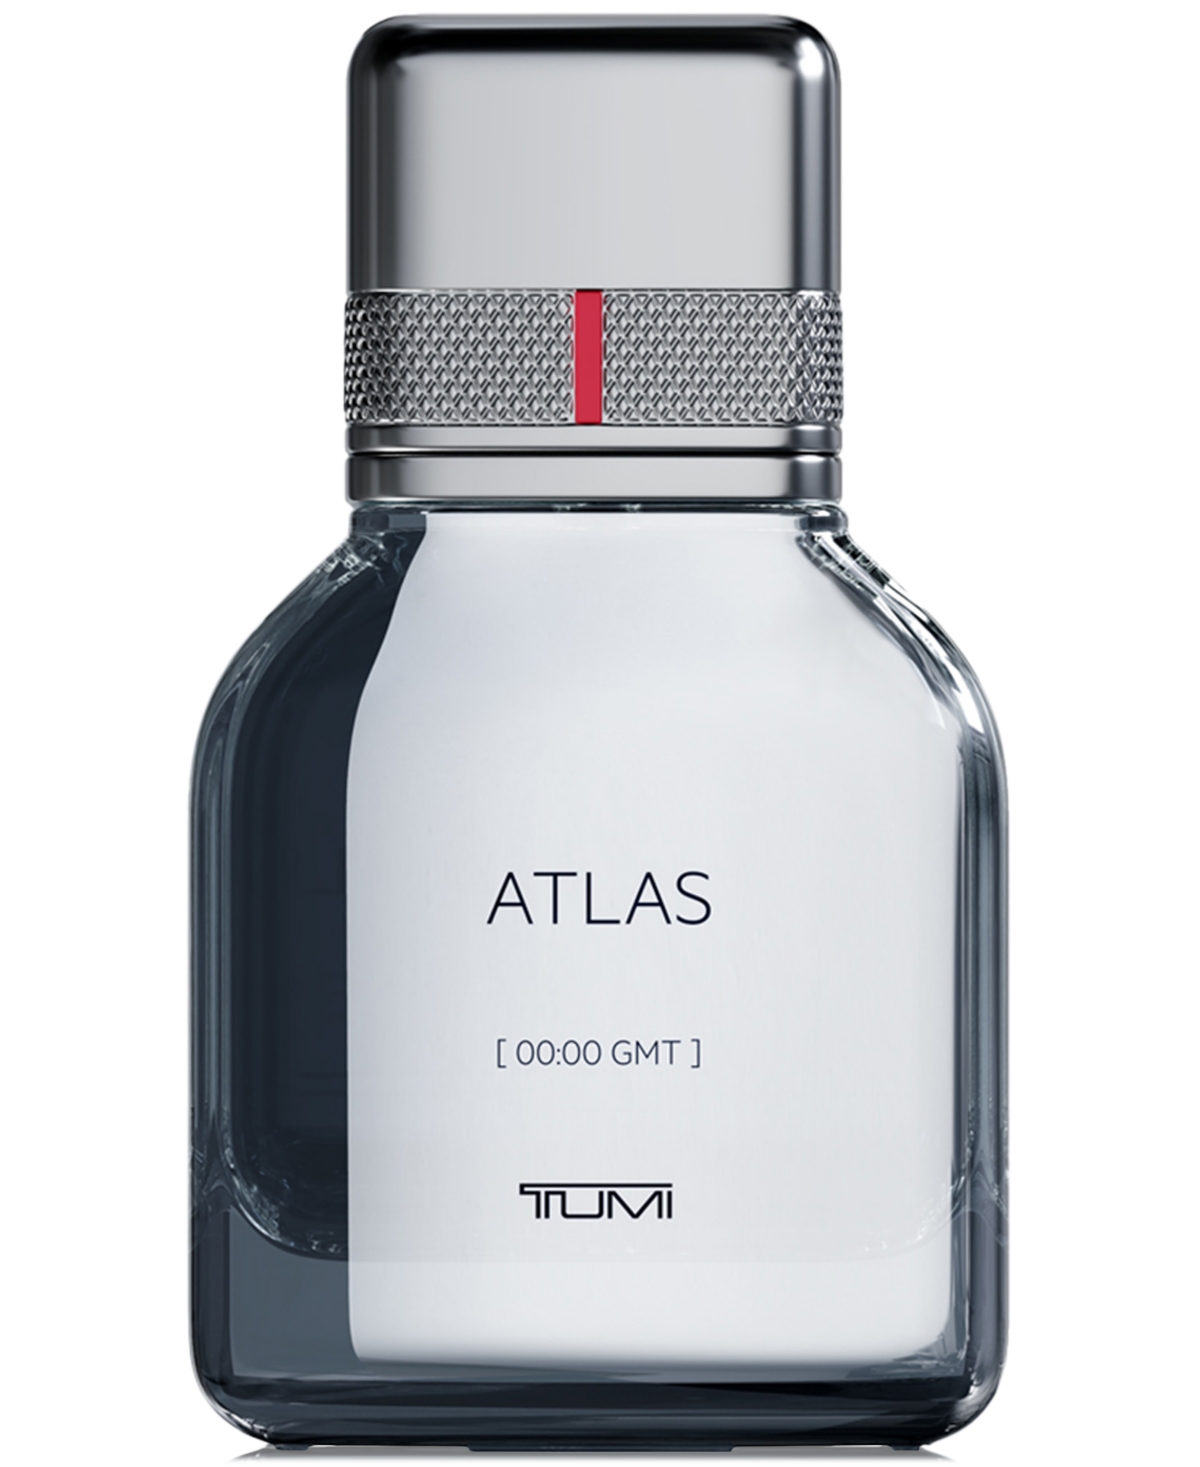 Atlas [00:00 Gmt] Tumi Eau de Parfum Spray, 1.7 oz.